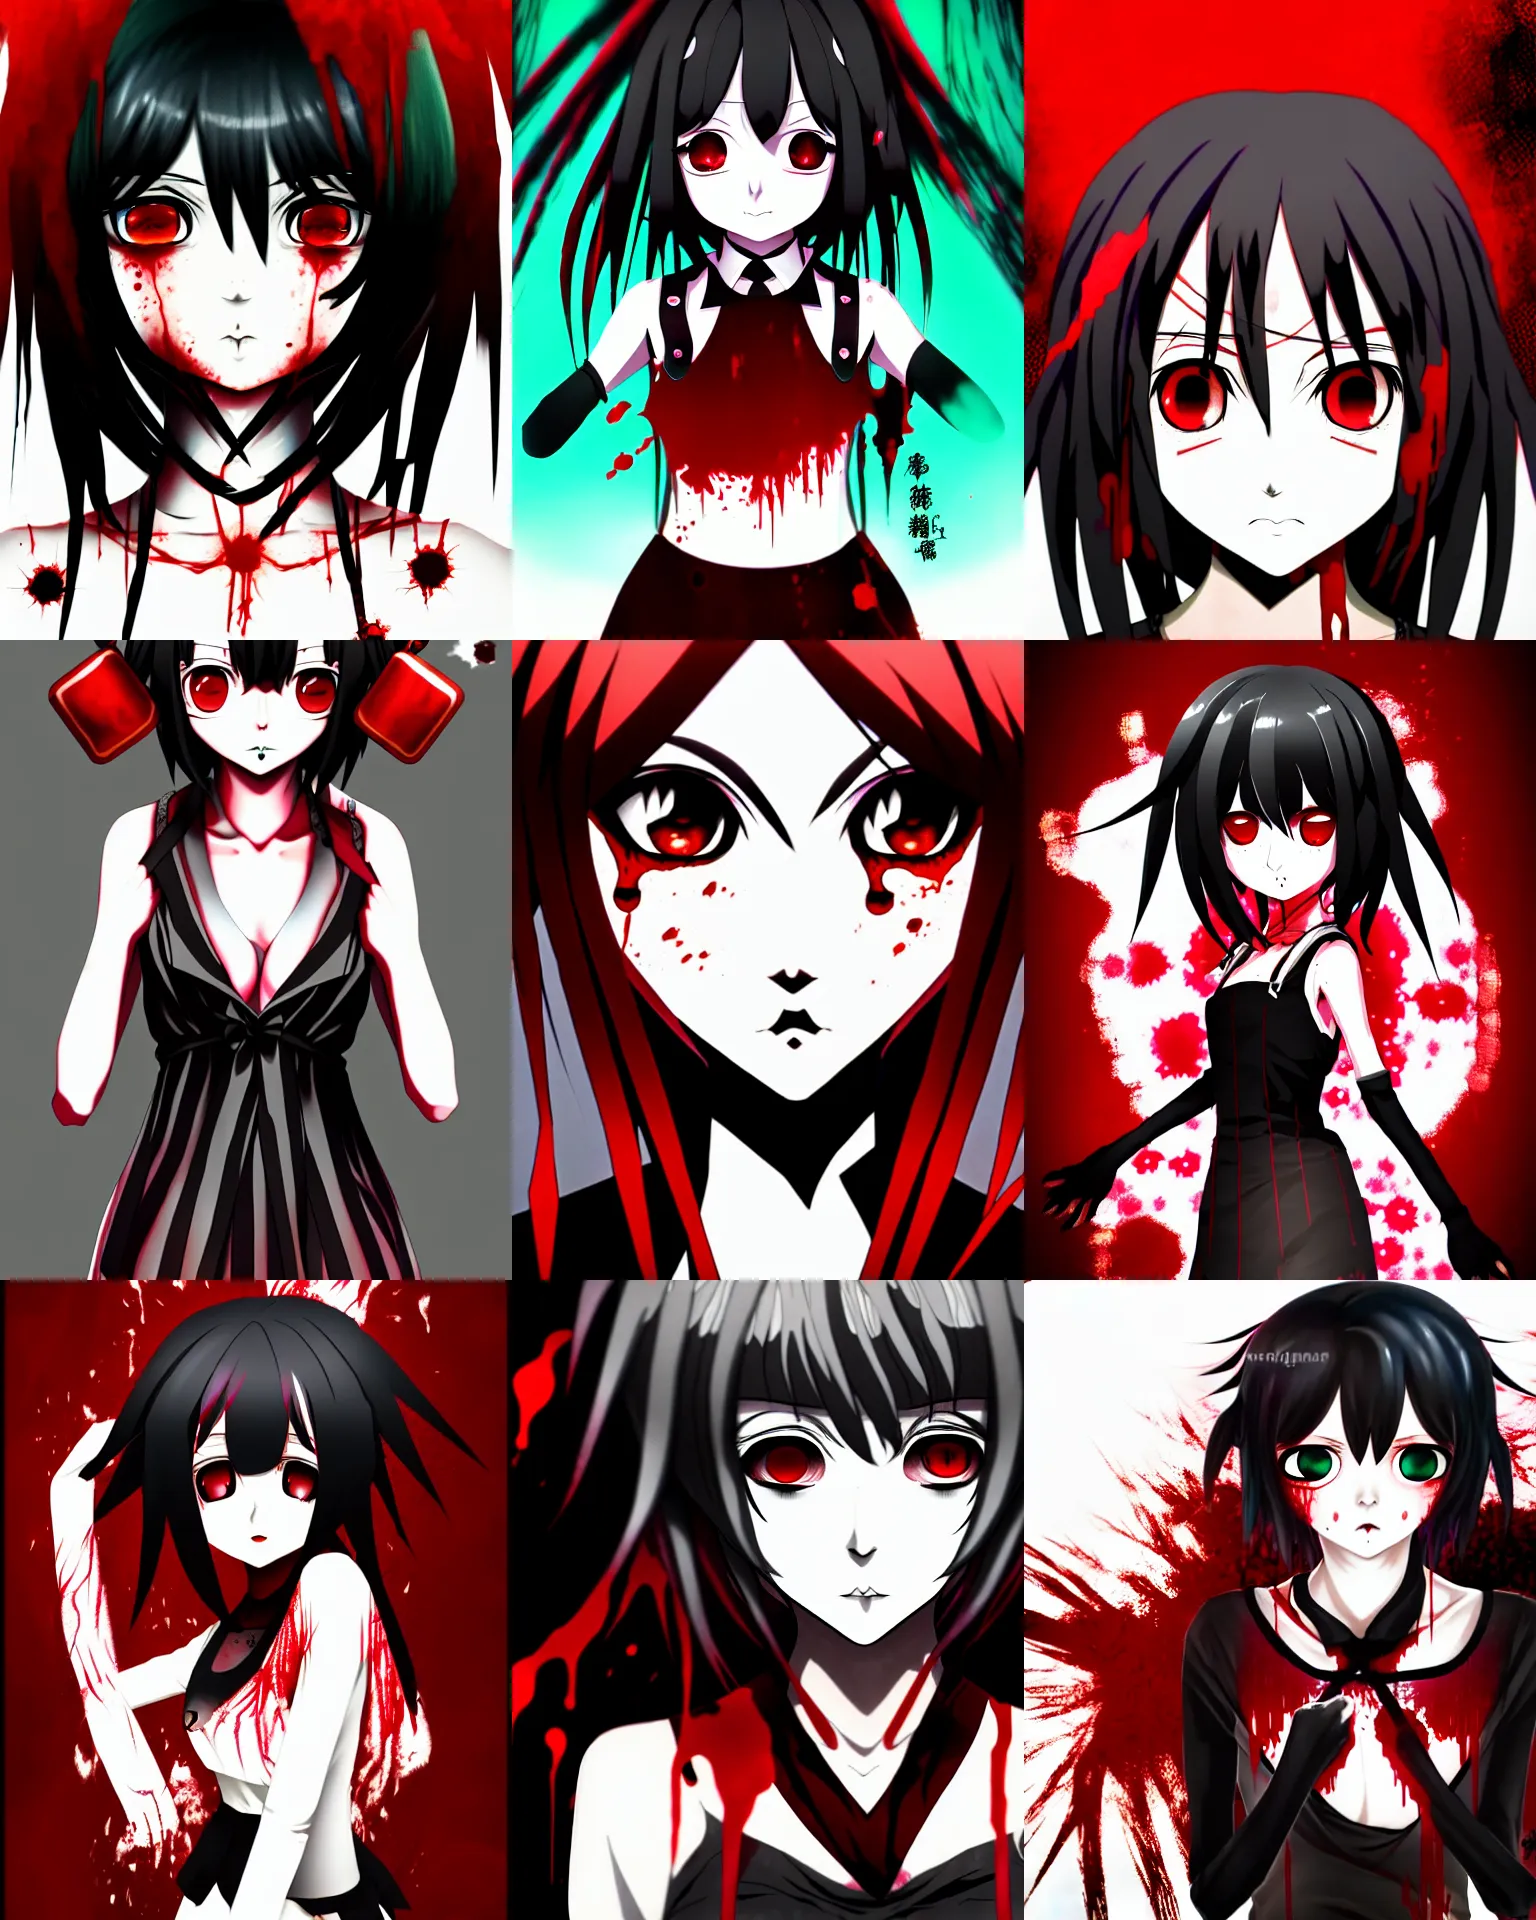 Prompt: dark psycho girl, red liquid, ultra details portrait, in the style of Suzuya Juuzou, sharp high quality anime